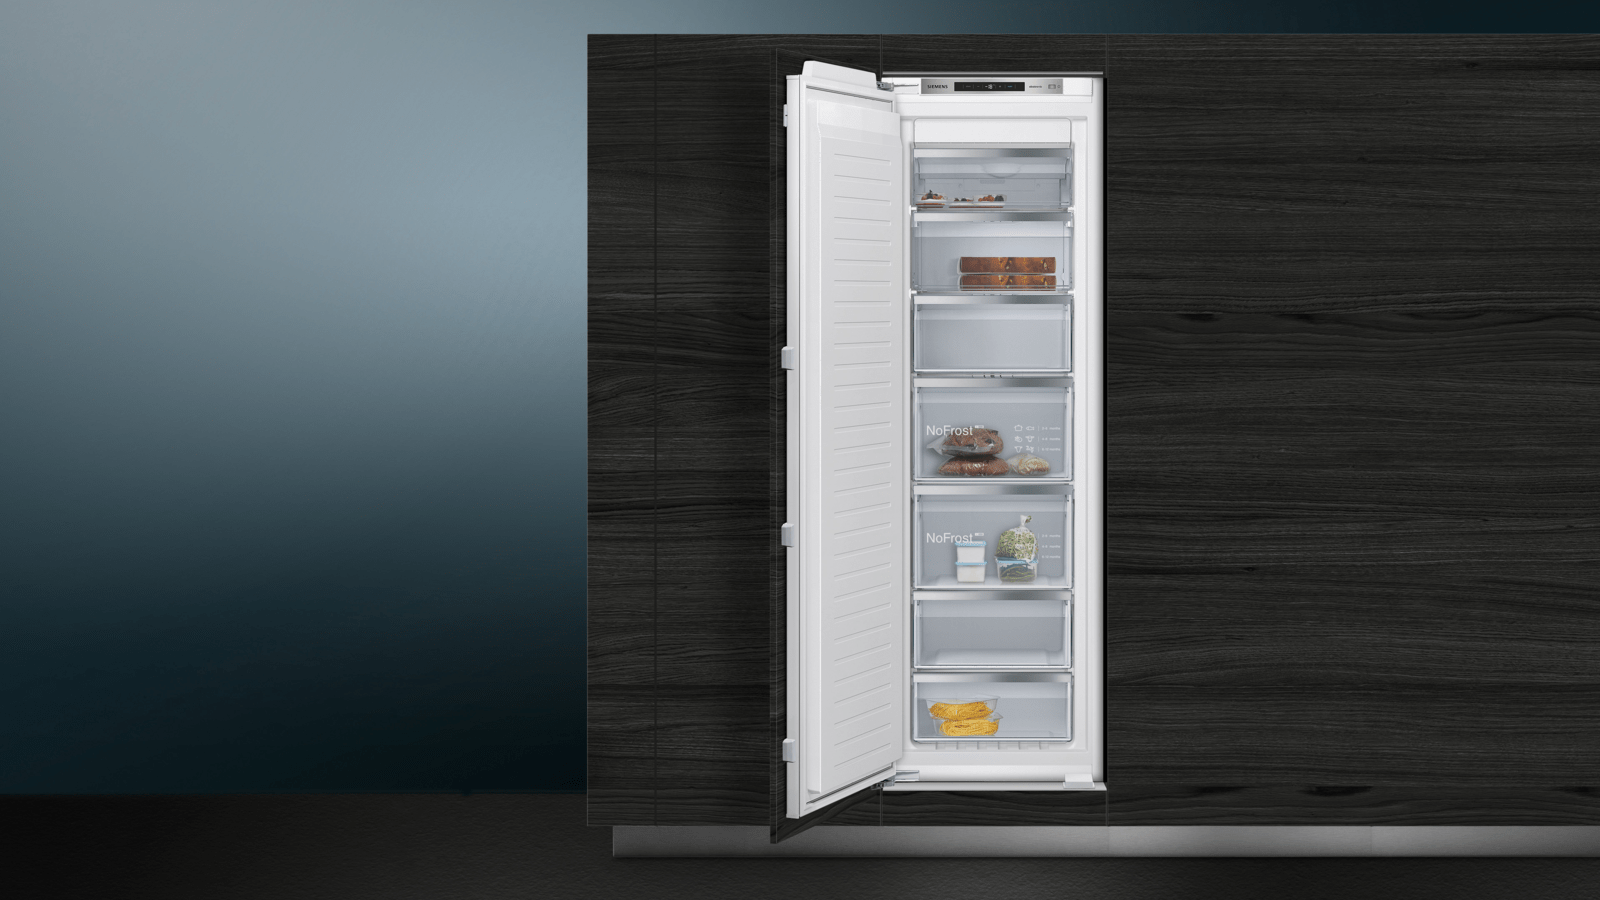 25+ Iq500 built in freezer 1772 x 558 cm gi81naef0g ideas in 2021 